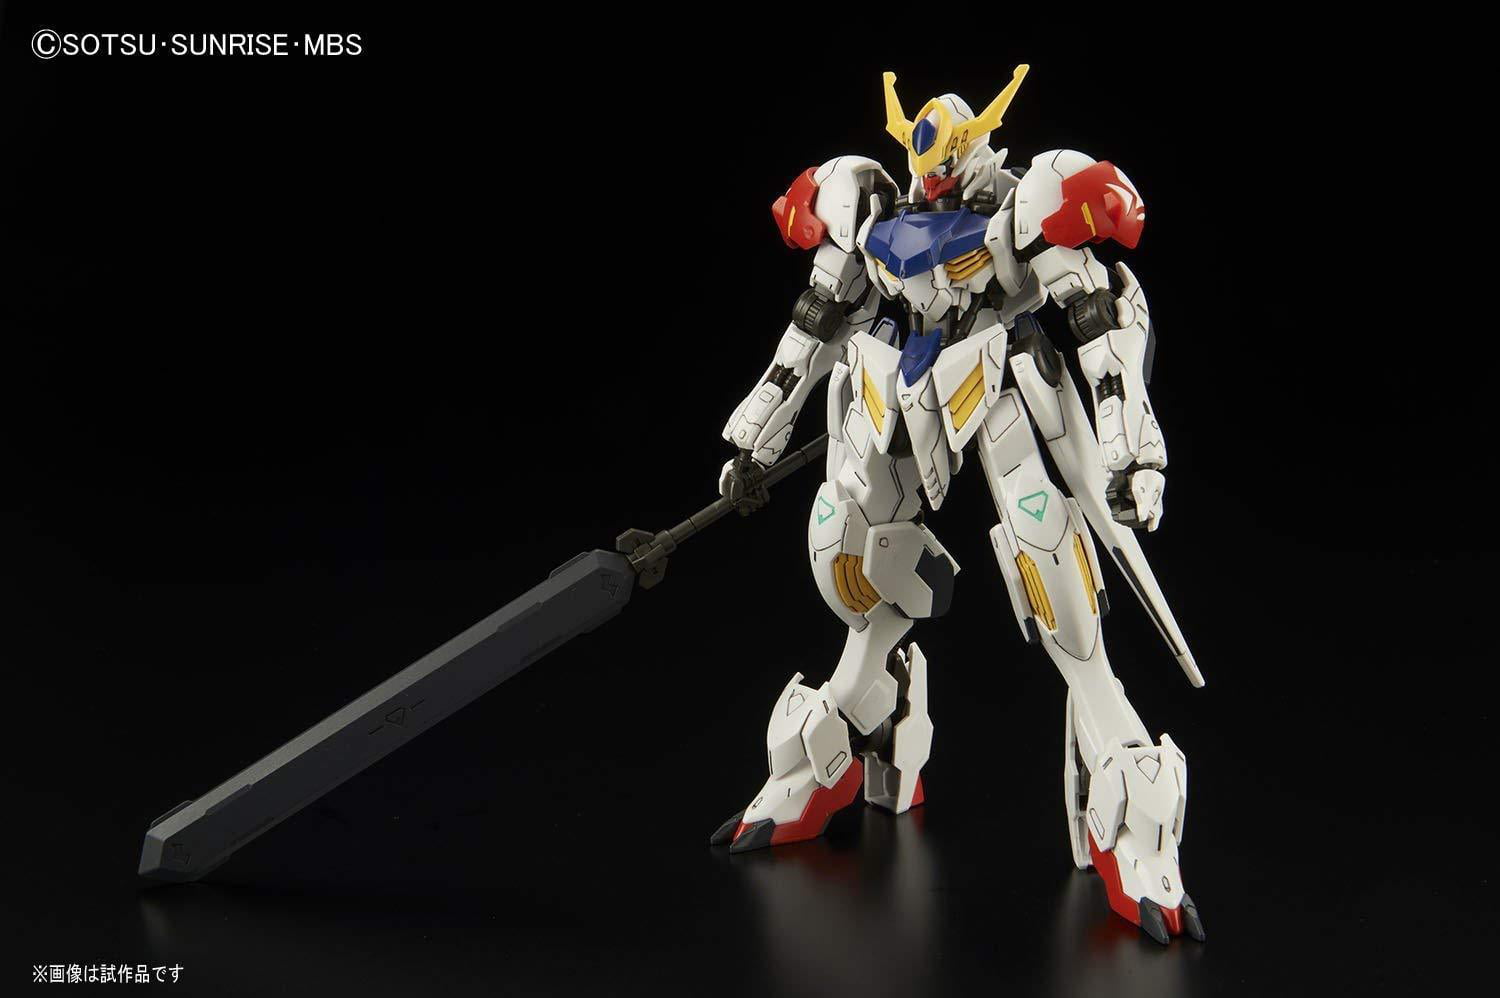 Bandai HG 1//144 Gundam Barbatos Lupus Plastic Model